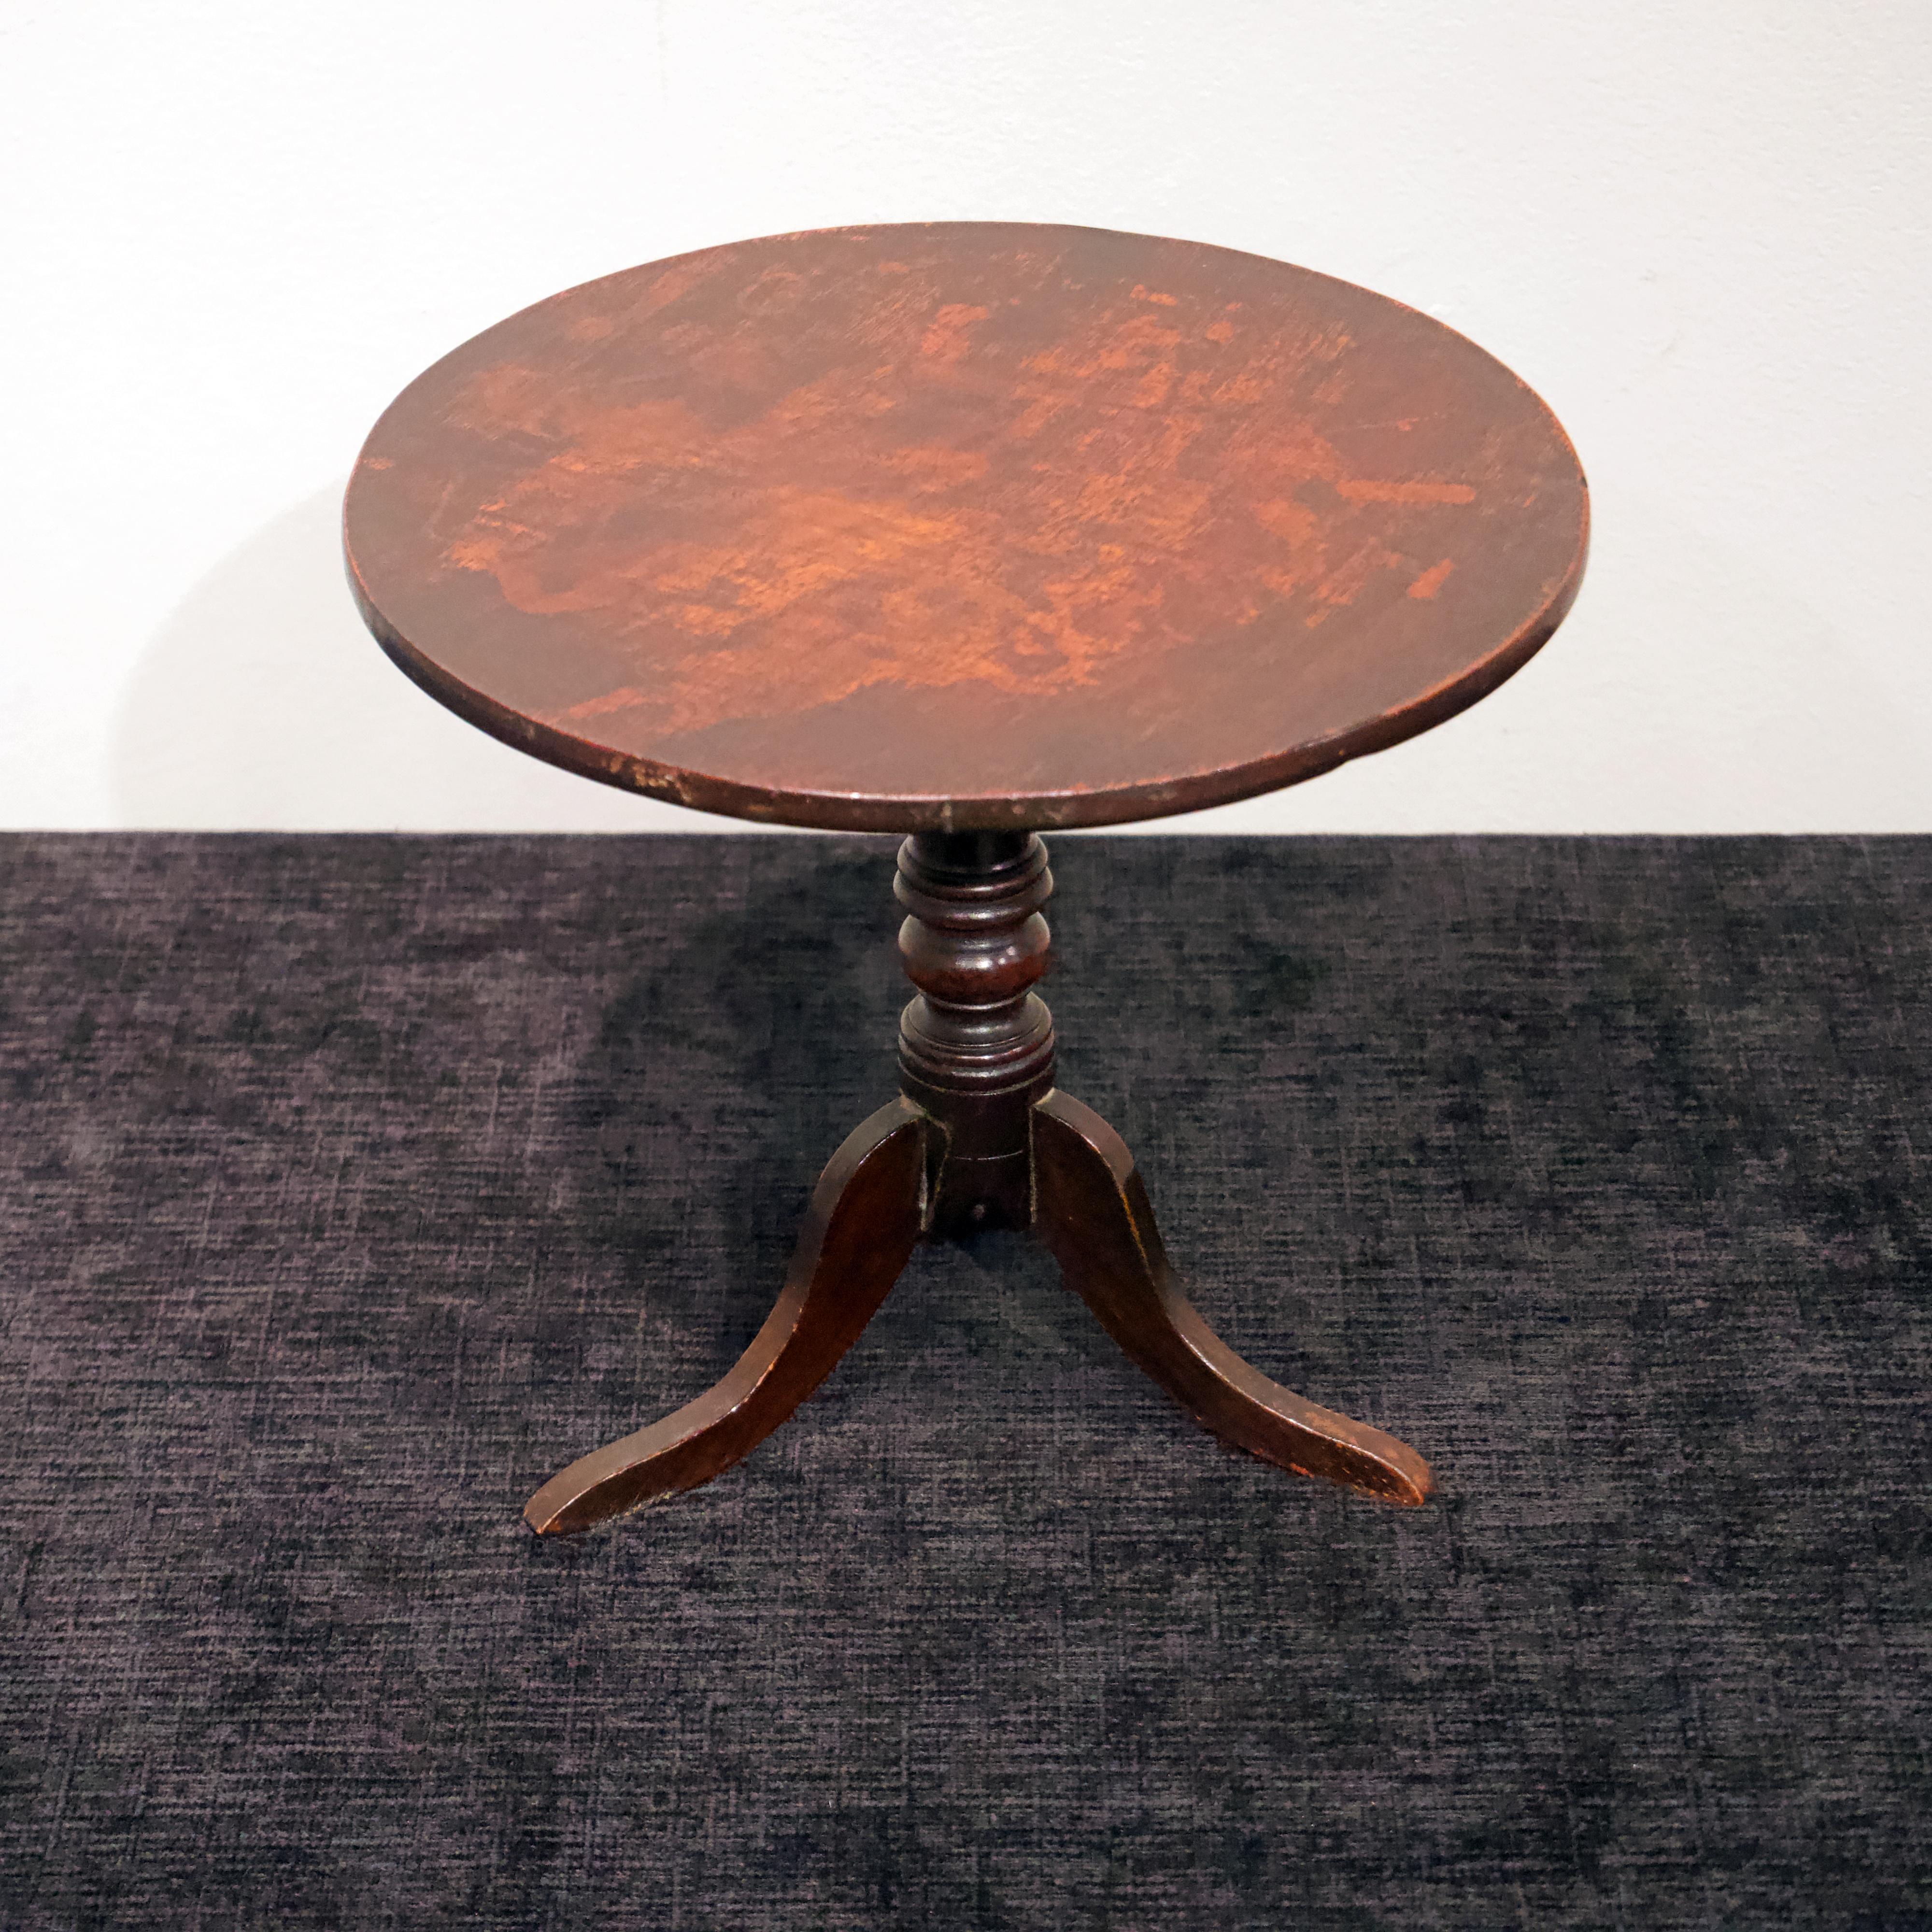 An early 19th century mahogany tilt-top tripod table
Mini, salesman or example sample.

With tilt-top, tripod base.